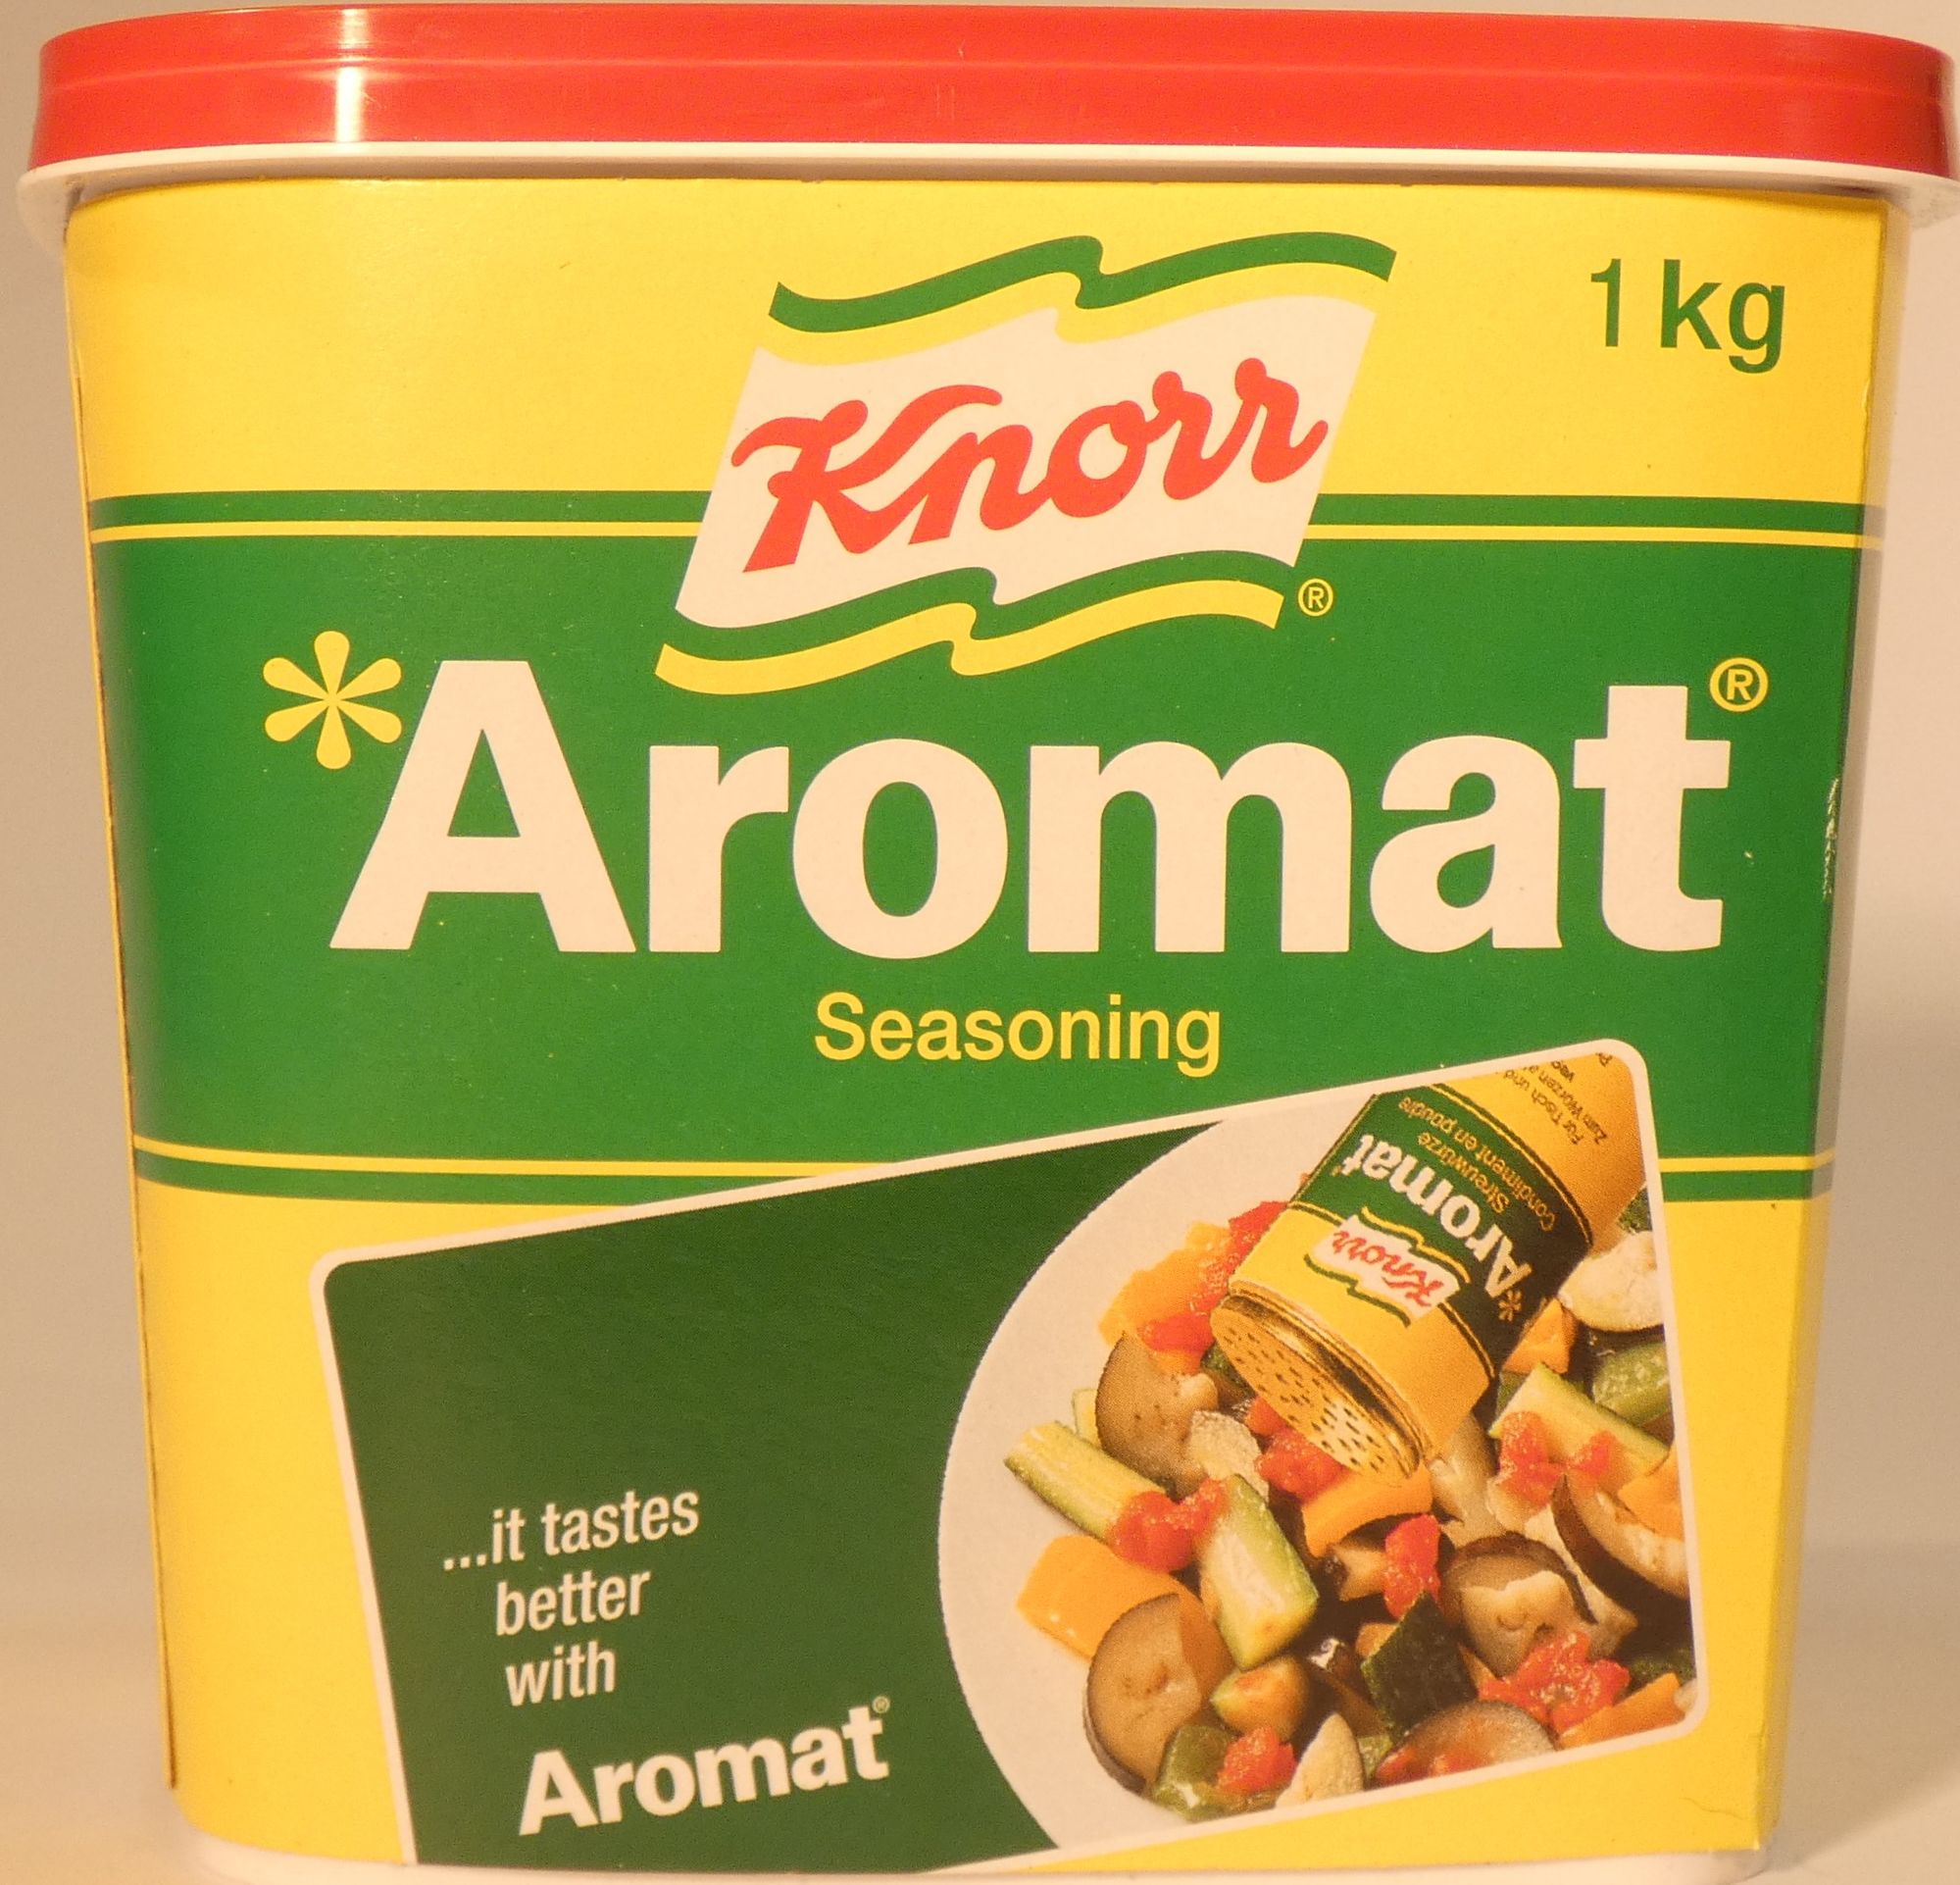 Knorr Aromat tin - 1kg